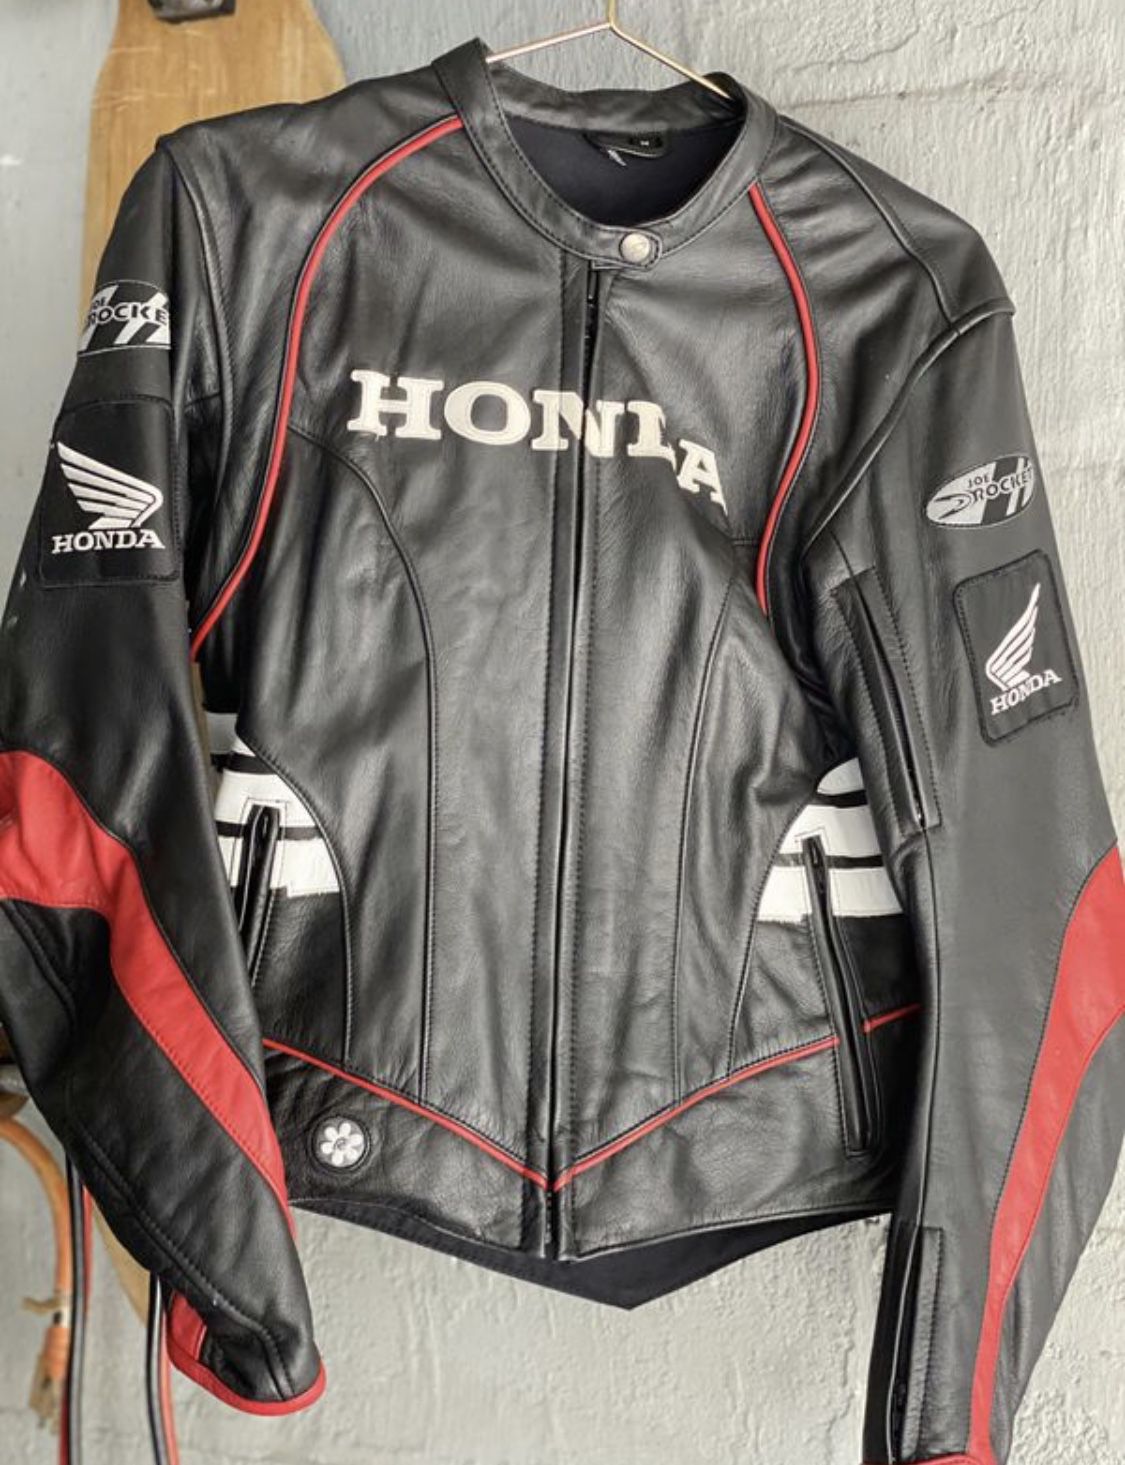 Honda women’s motorcycle jacket